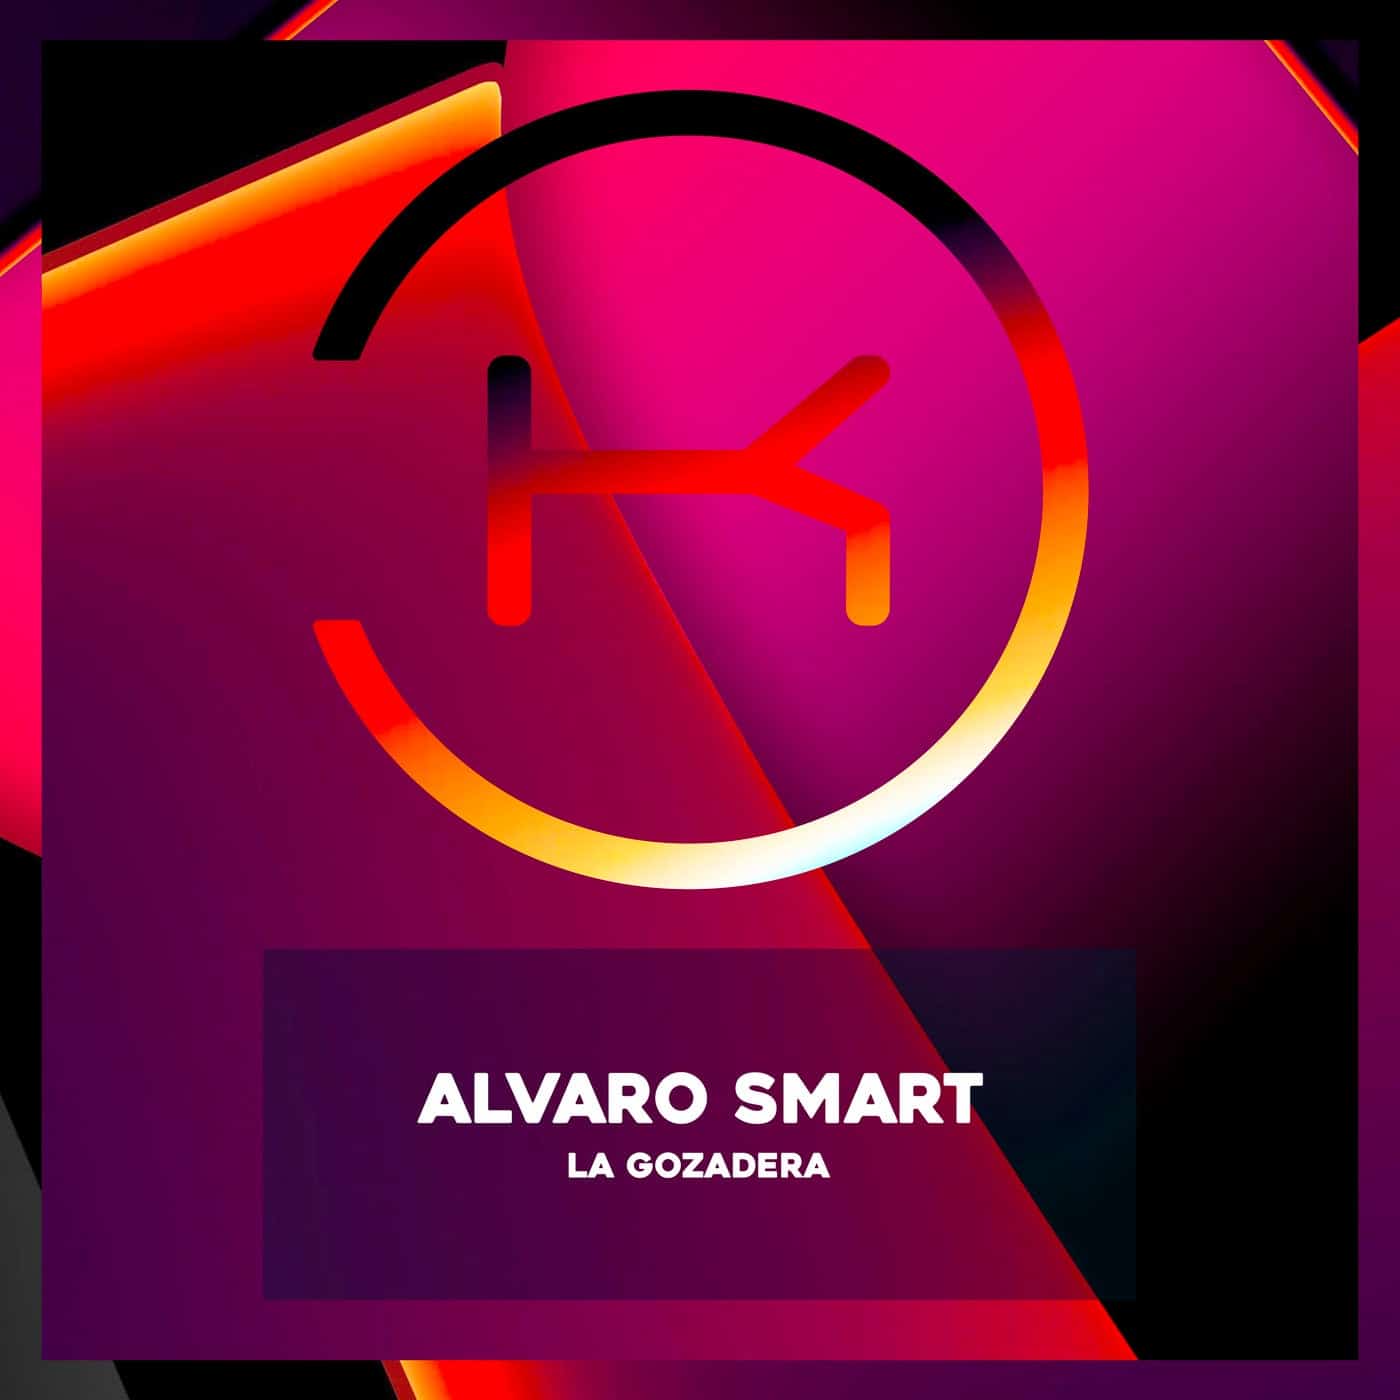 Download Alvaro Smart - La Gozadera on Electrobuzz